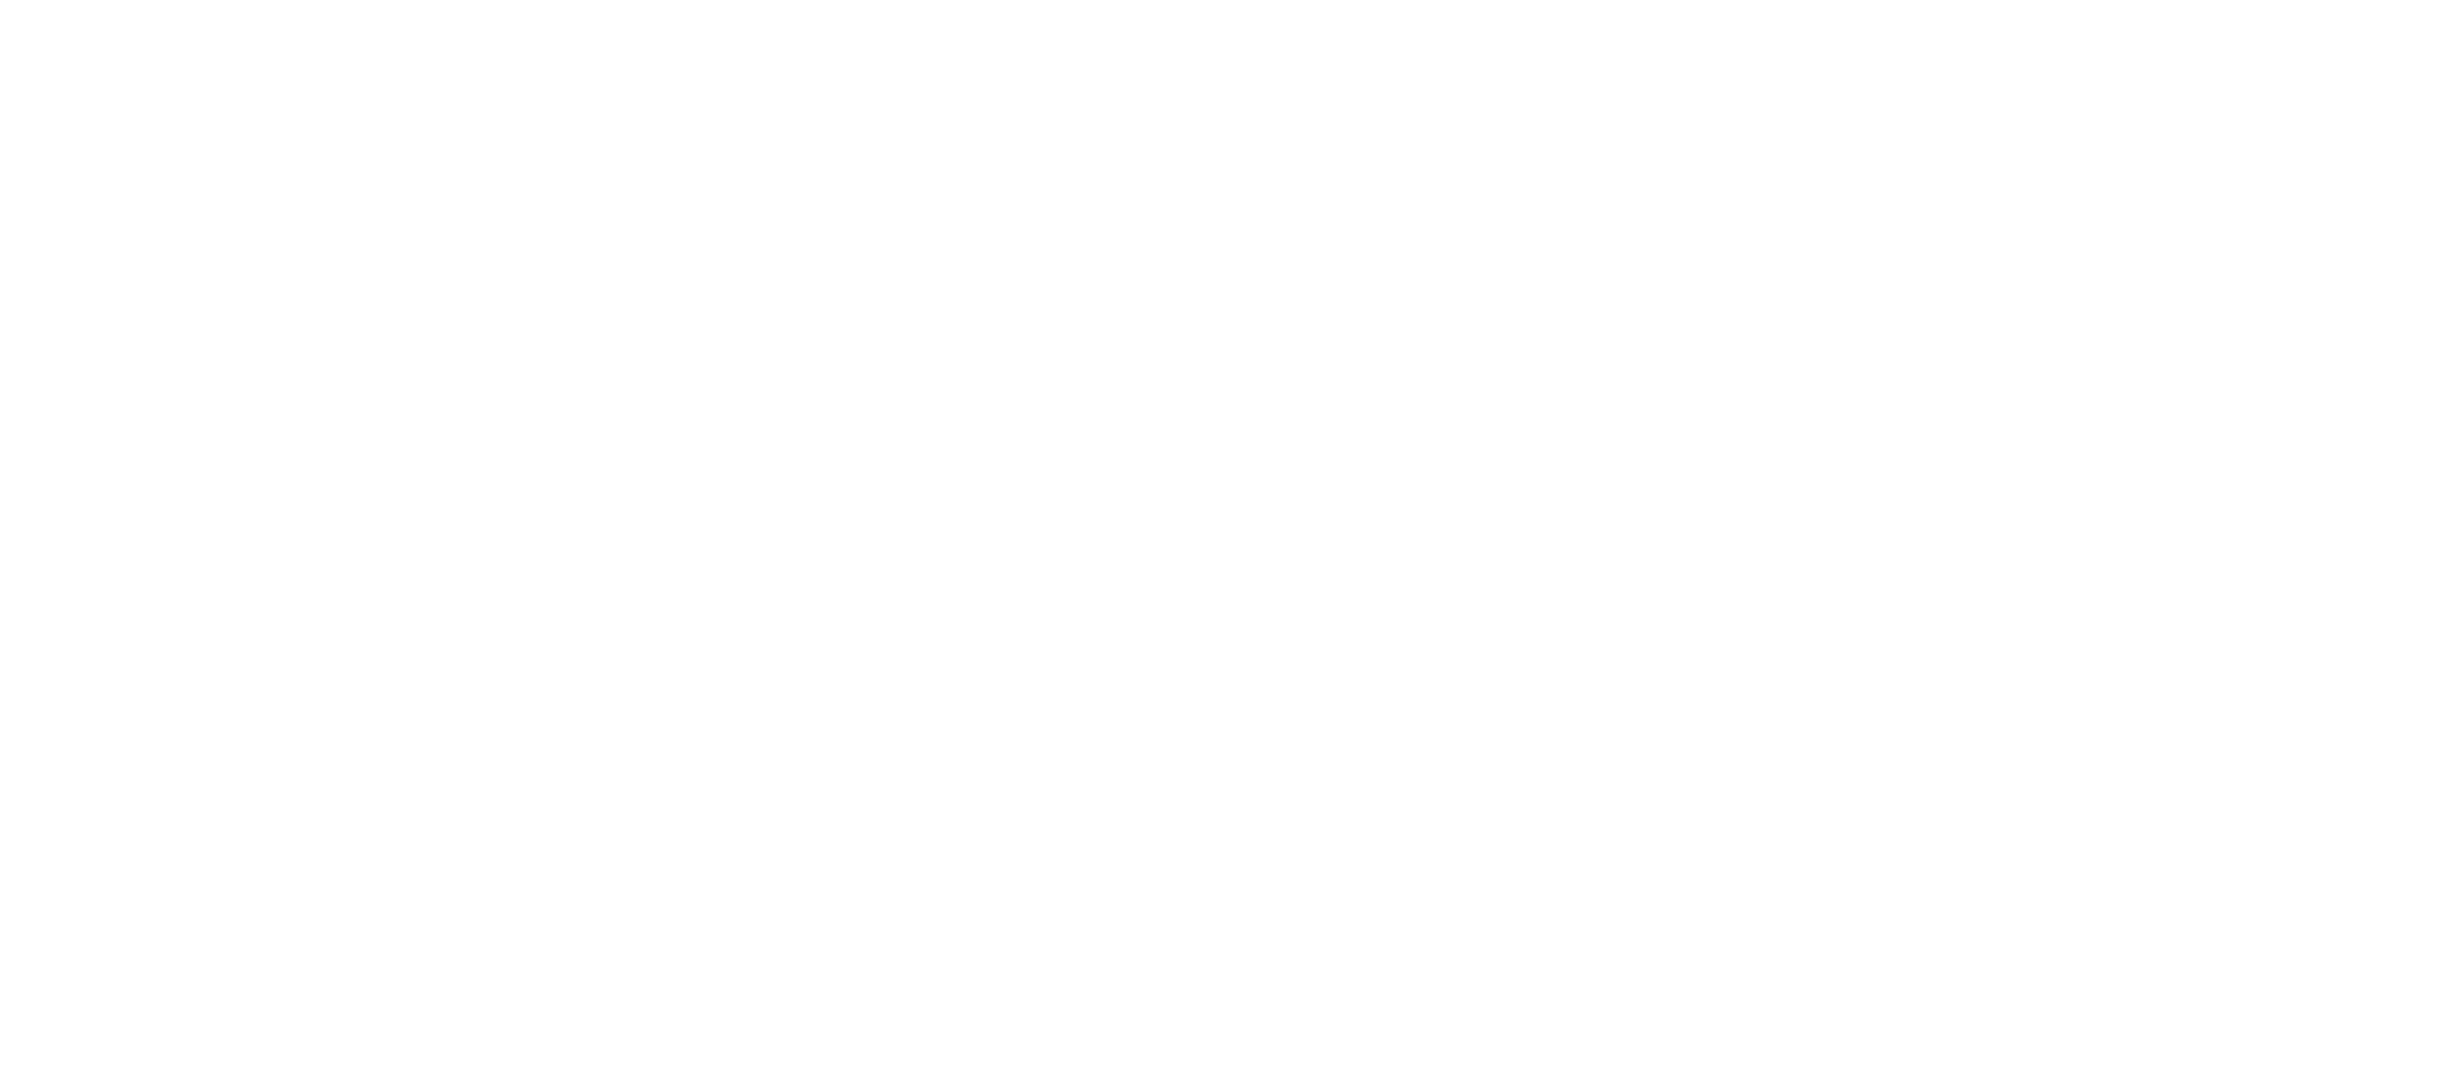 300 Projekte in 50 Ländern